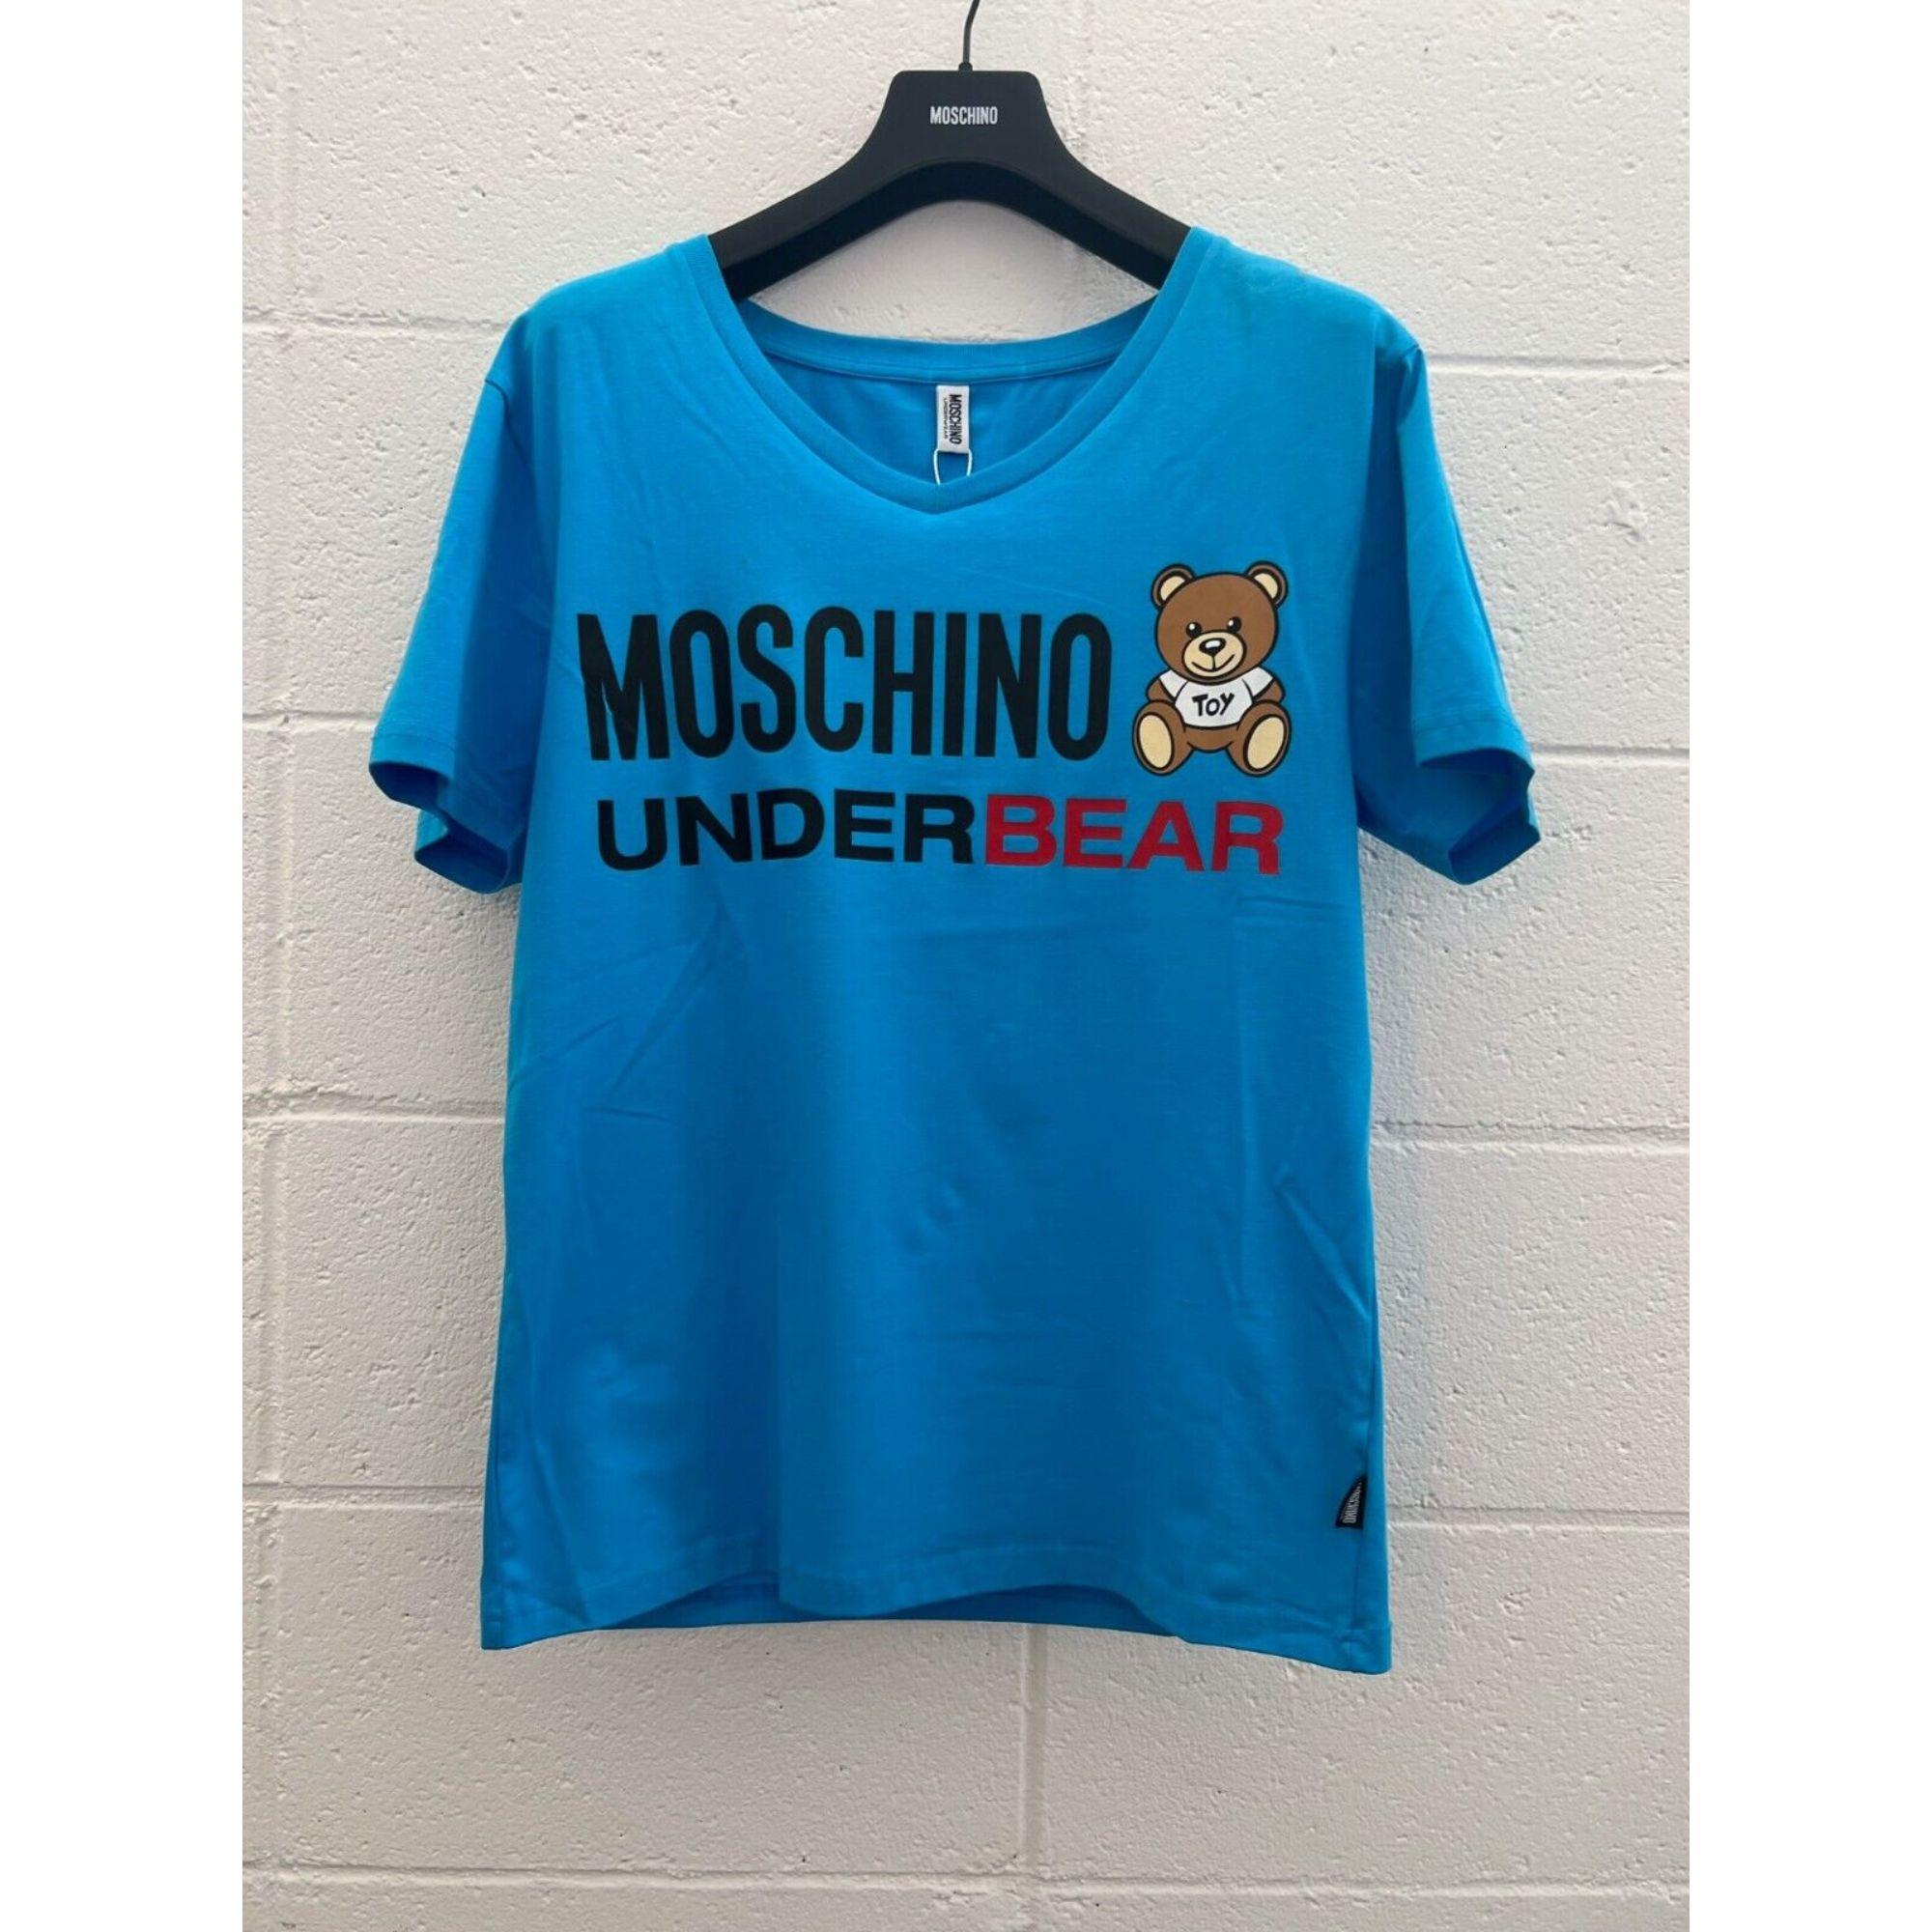 SS20 Moschino Underwear Underbear Teddy Bear T-shirt by Jeremy Scott, Size XL For Sale